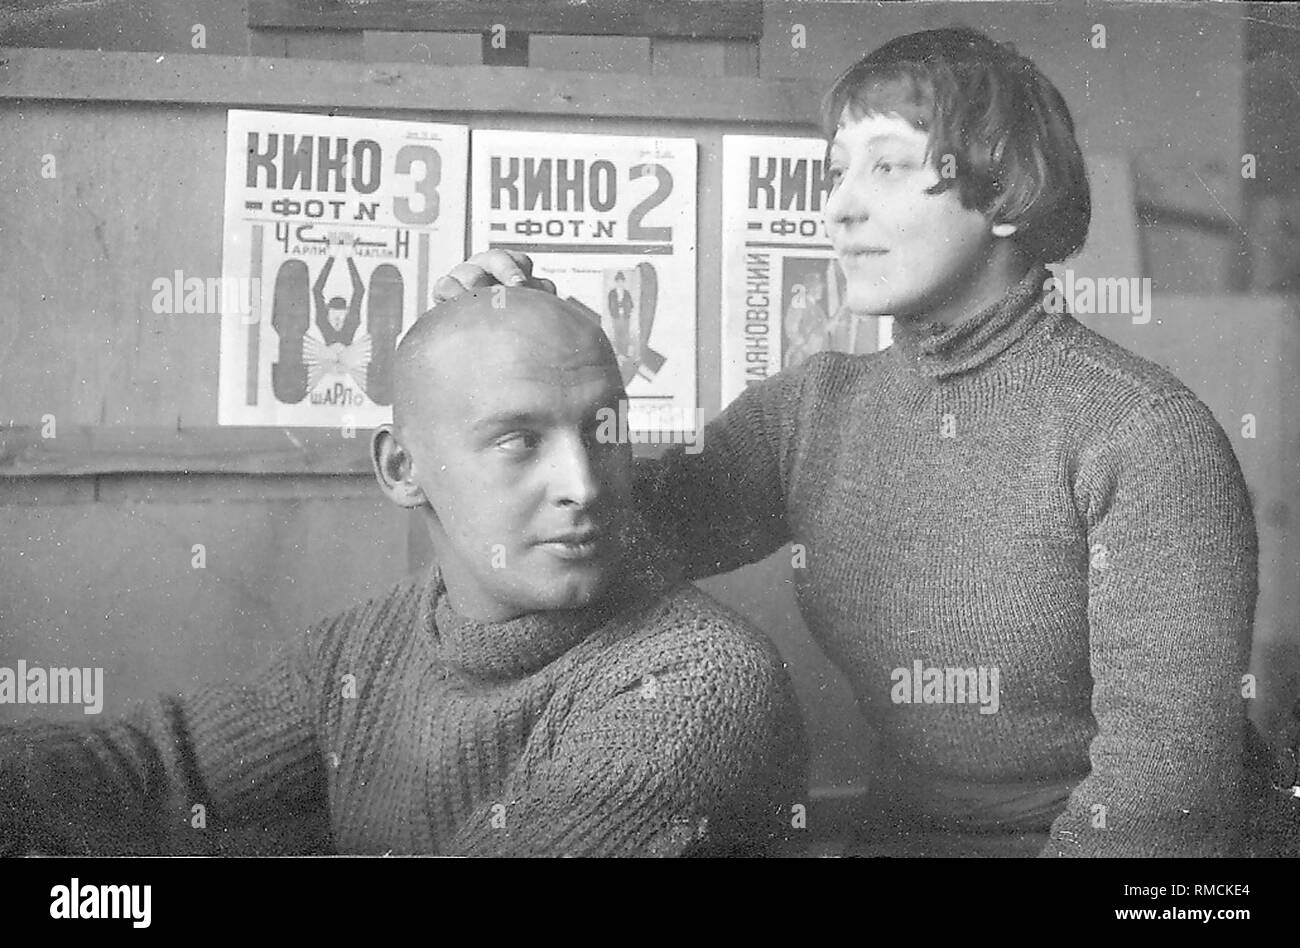 Alexander Rodchenko (1891-1956) and Varvara Stepanova (1894-1958). Photograph Stock Photo